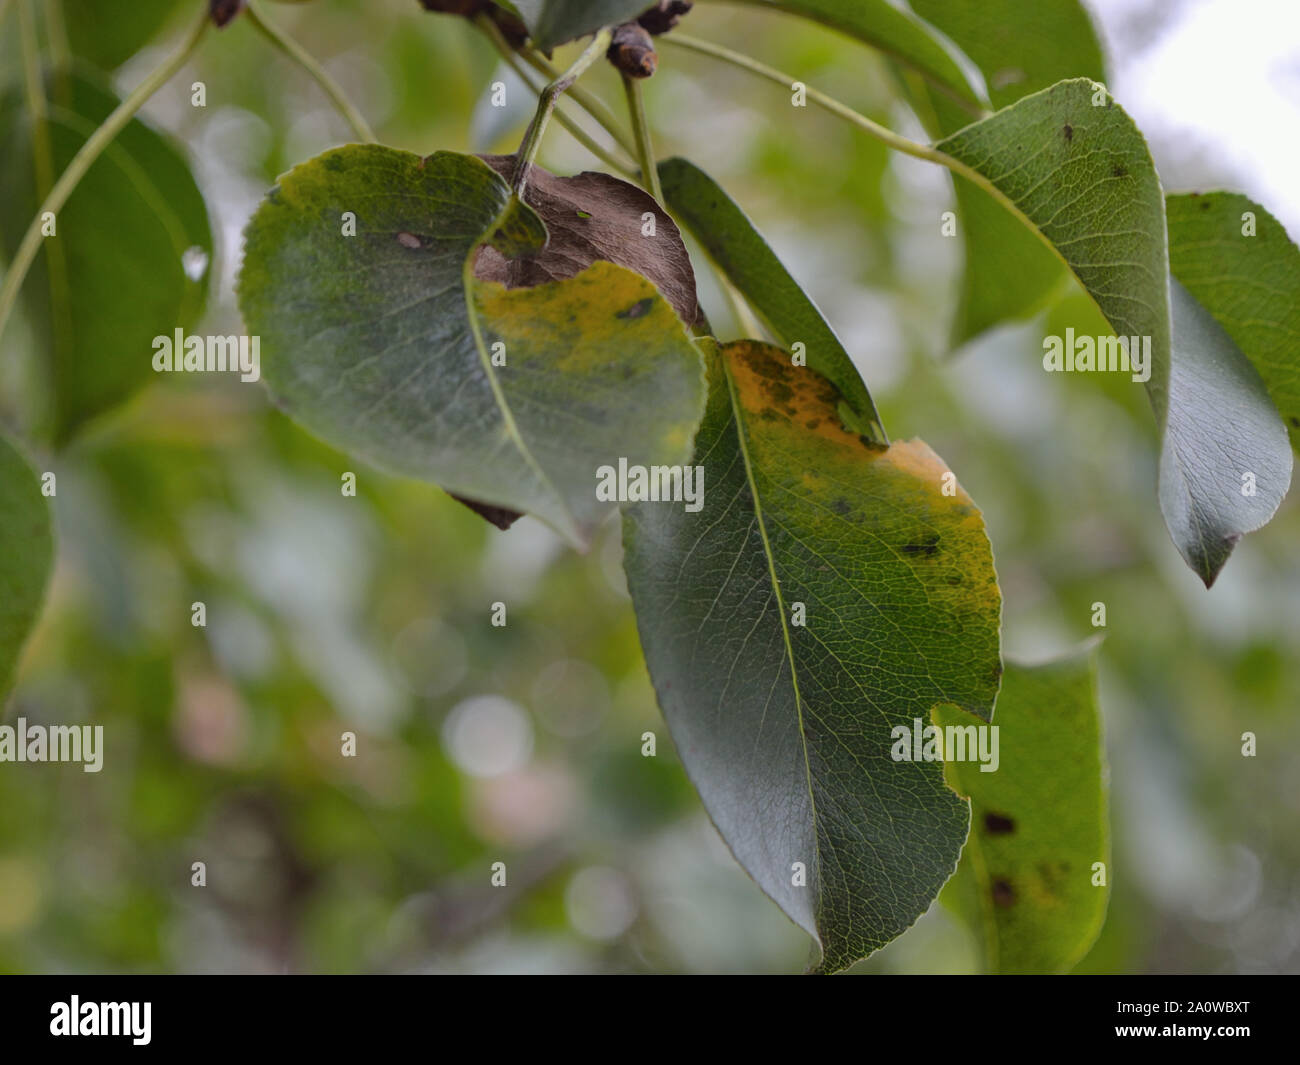 Pear scab fruit spotting on pear leaves, Venturia pyrina Stock Photo